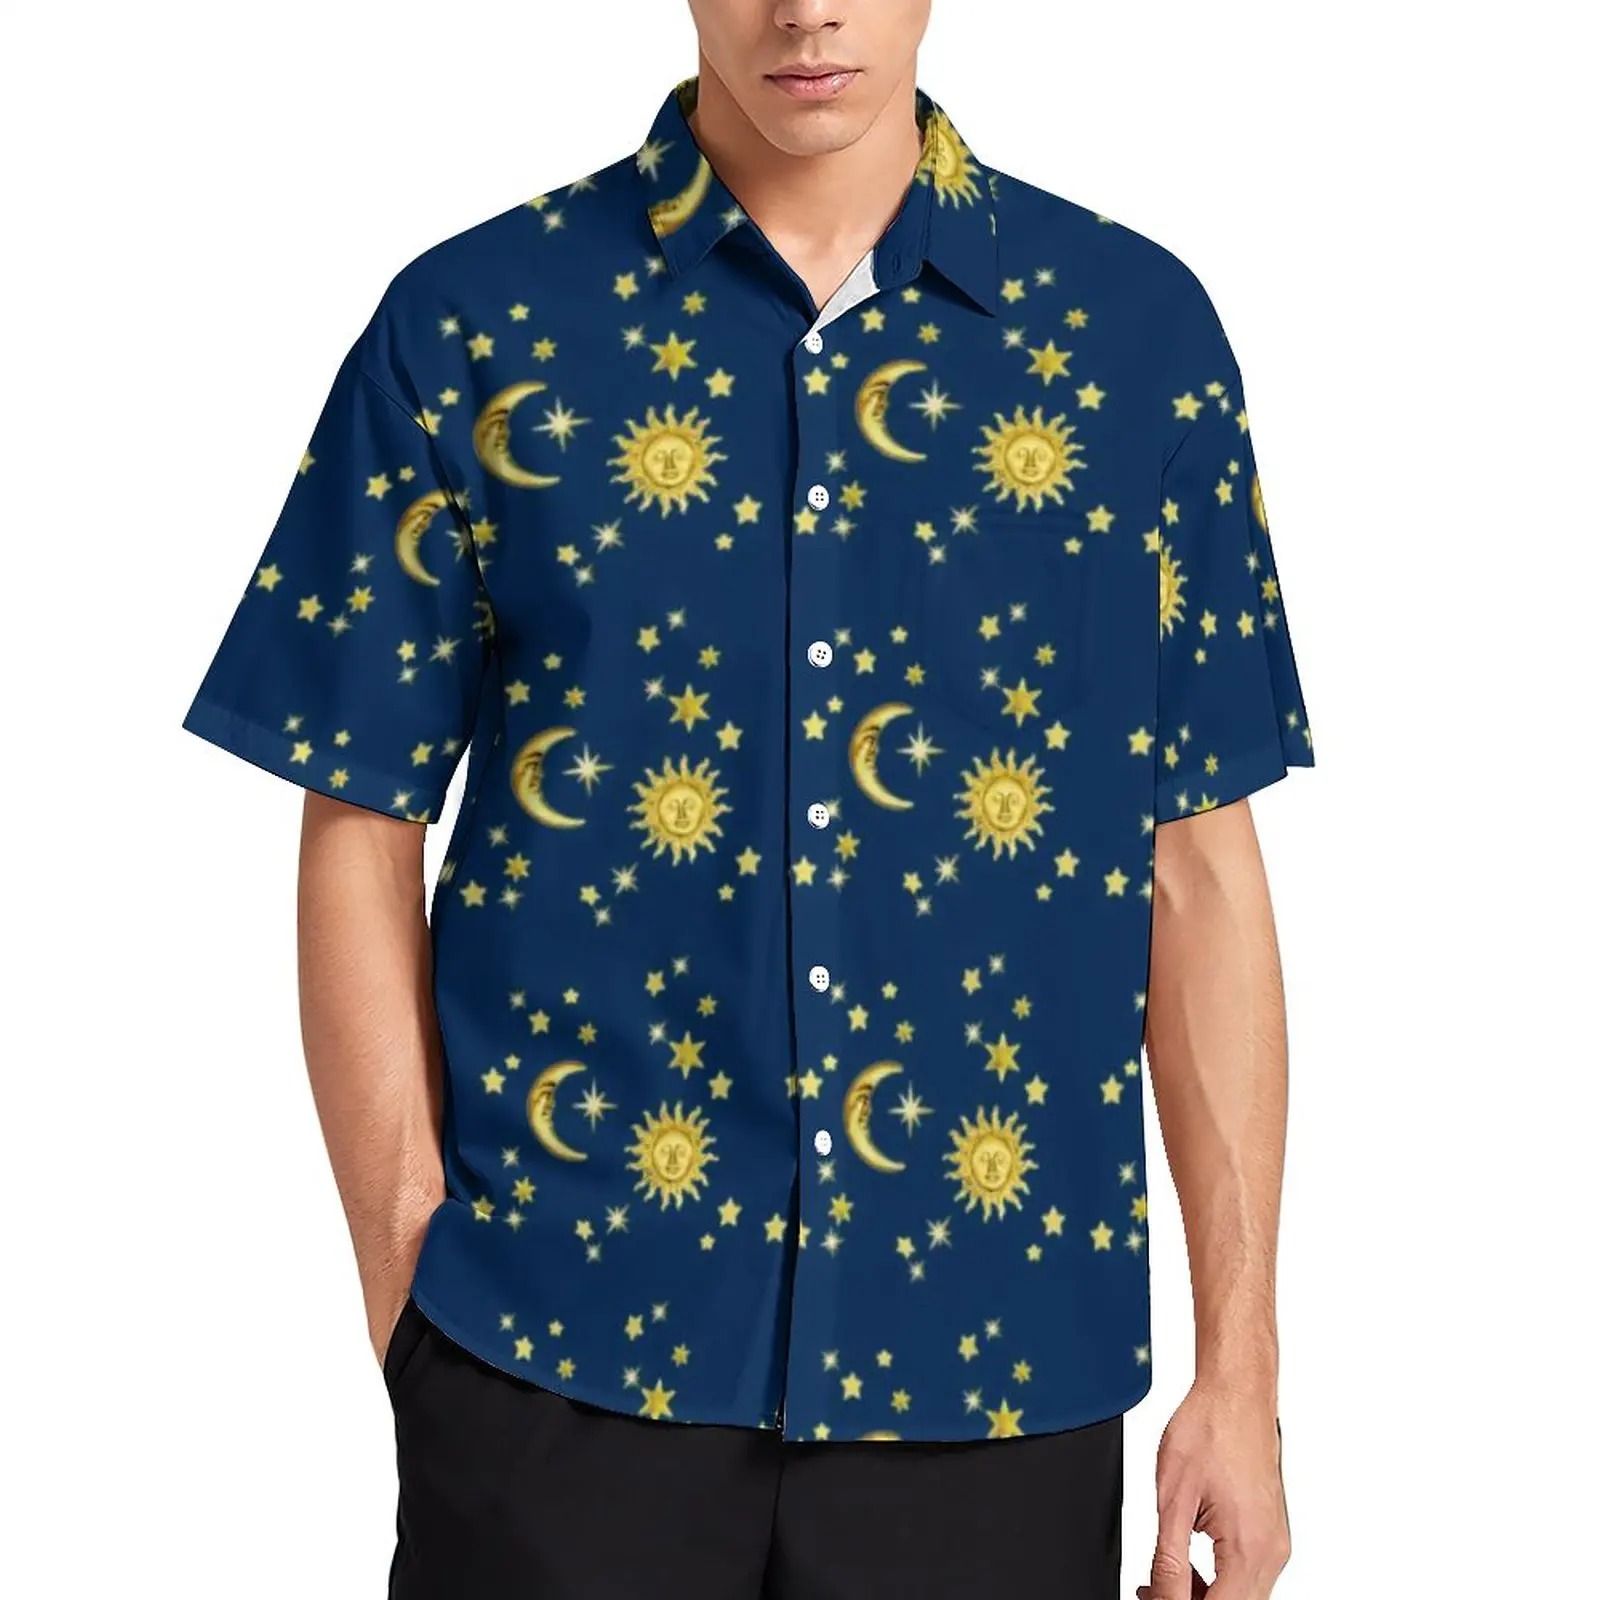 

Glod Moon Beach Shirt Sun And Stars Print Hawaii Casual Shirts Man Trending Blouses Short-Sleeved Custom Top Plus Size